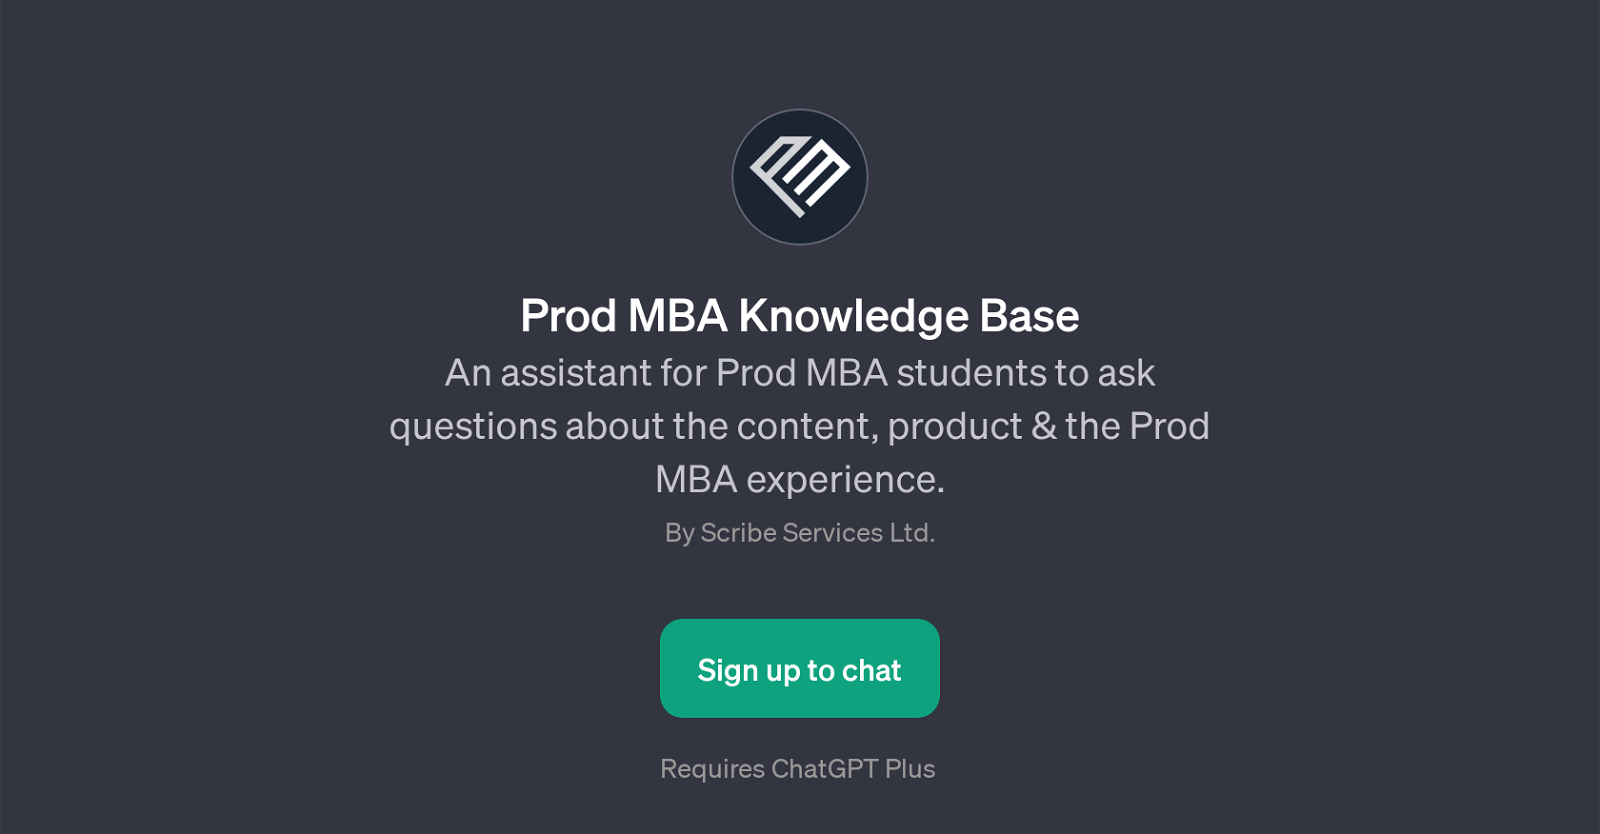 Prod MBA Knowledge Base website